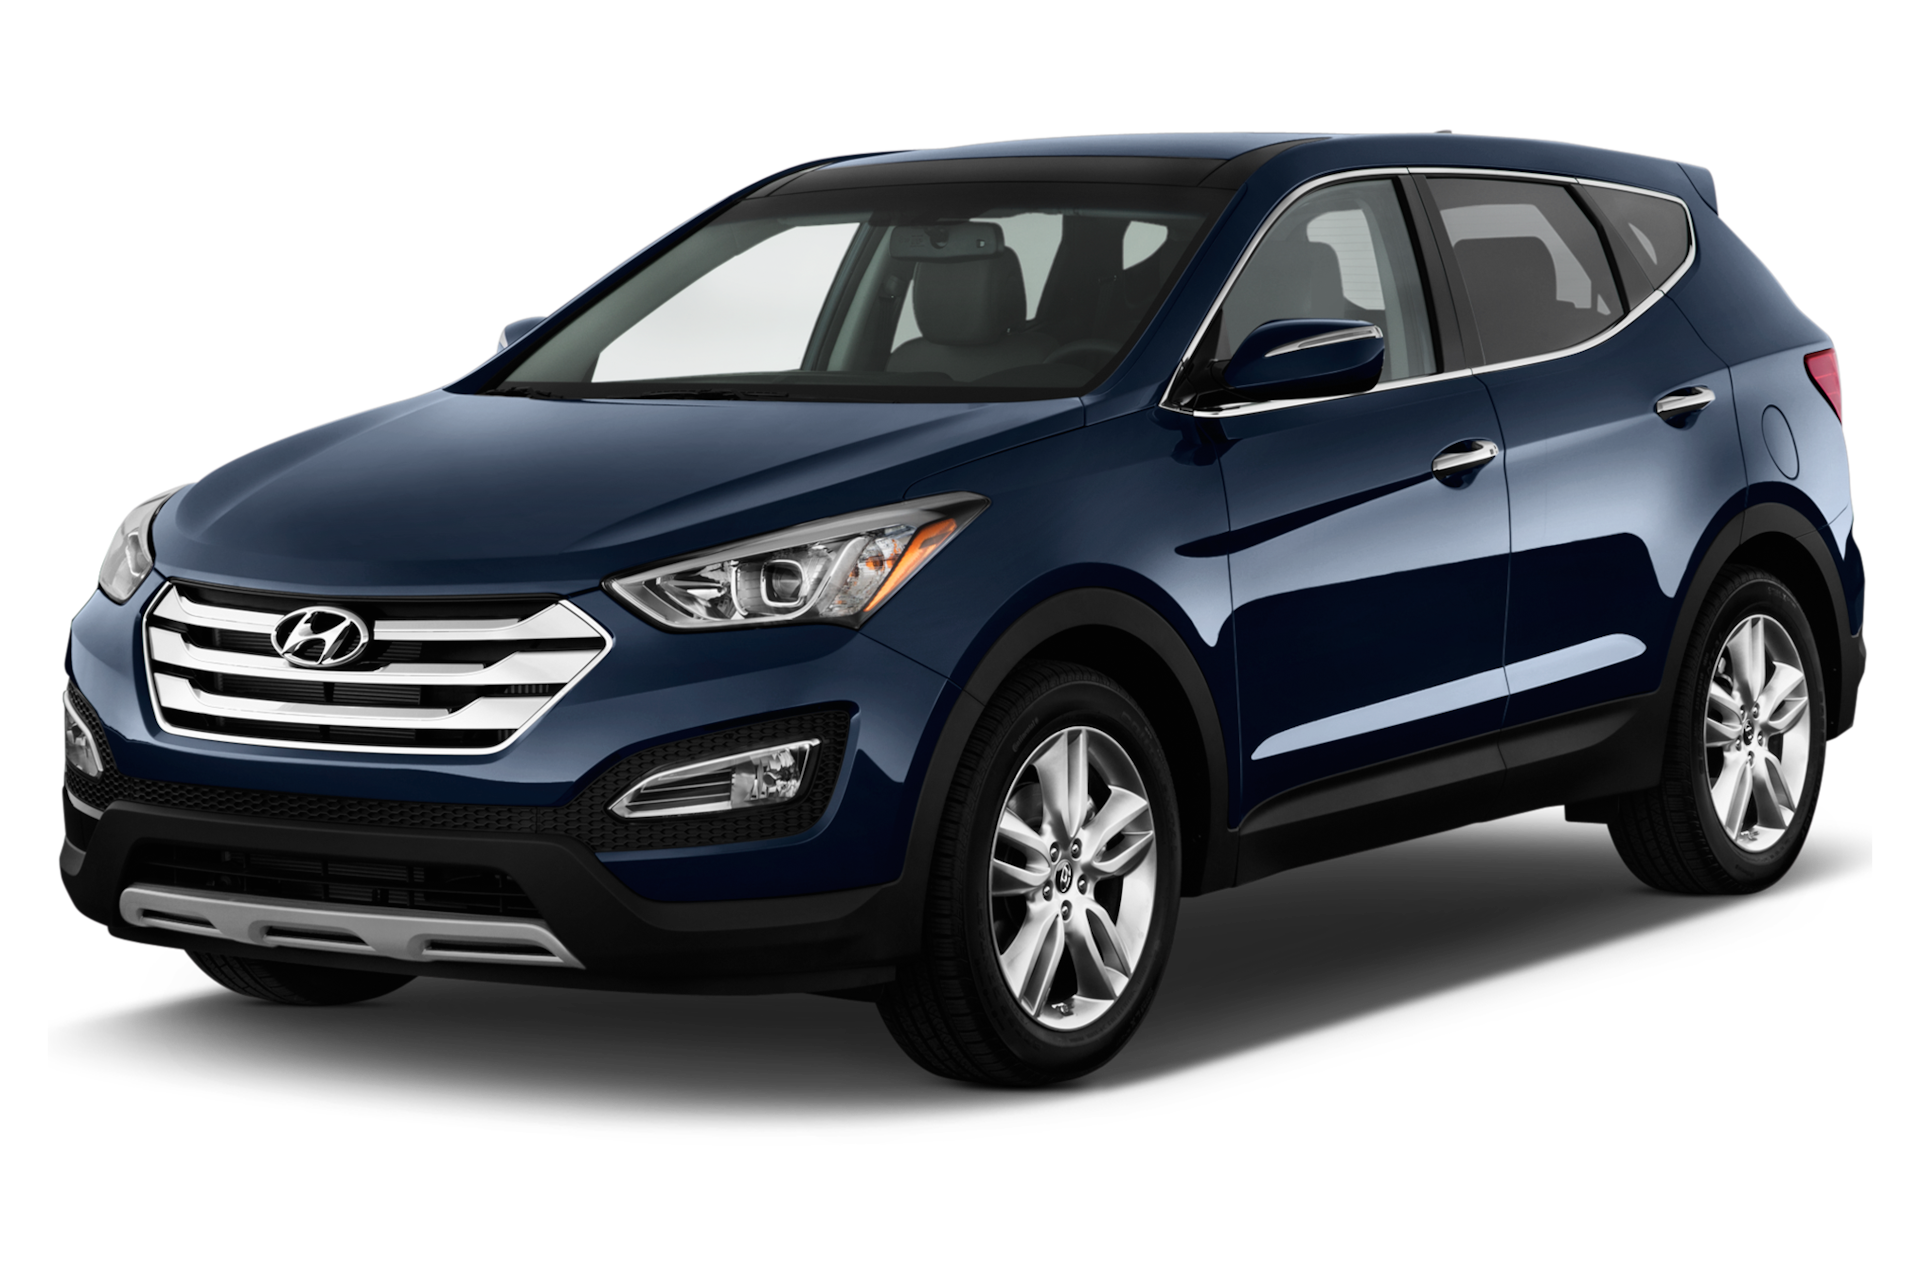 2014 Hyundai Santa Fe Sport Prices, Reviews, and Photos - MotorTrend